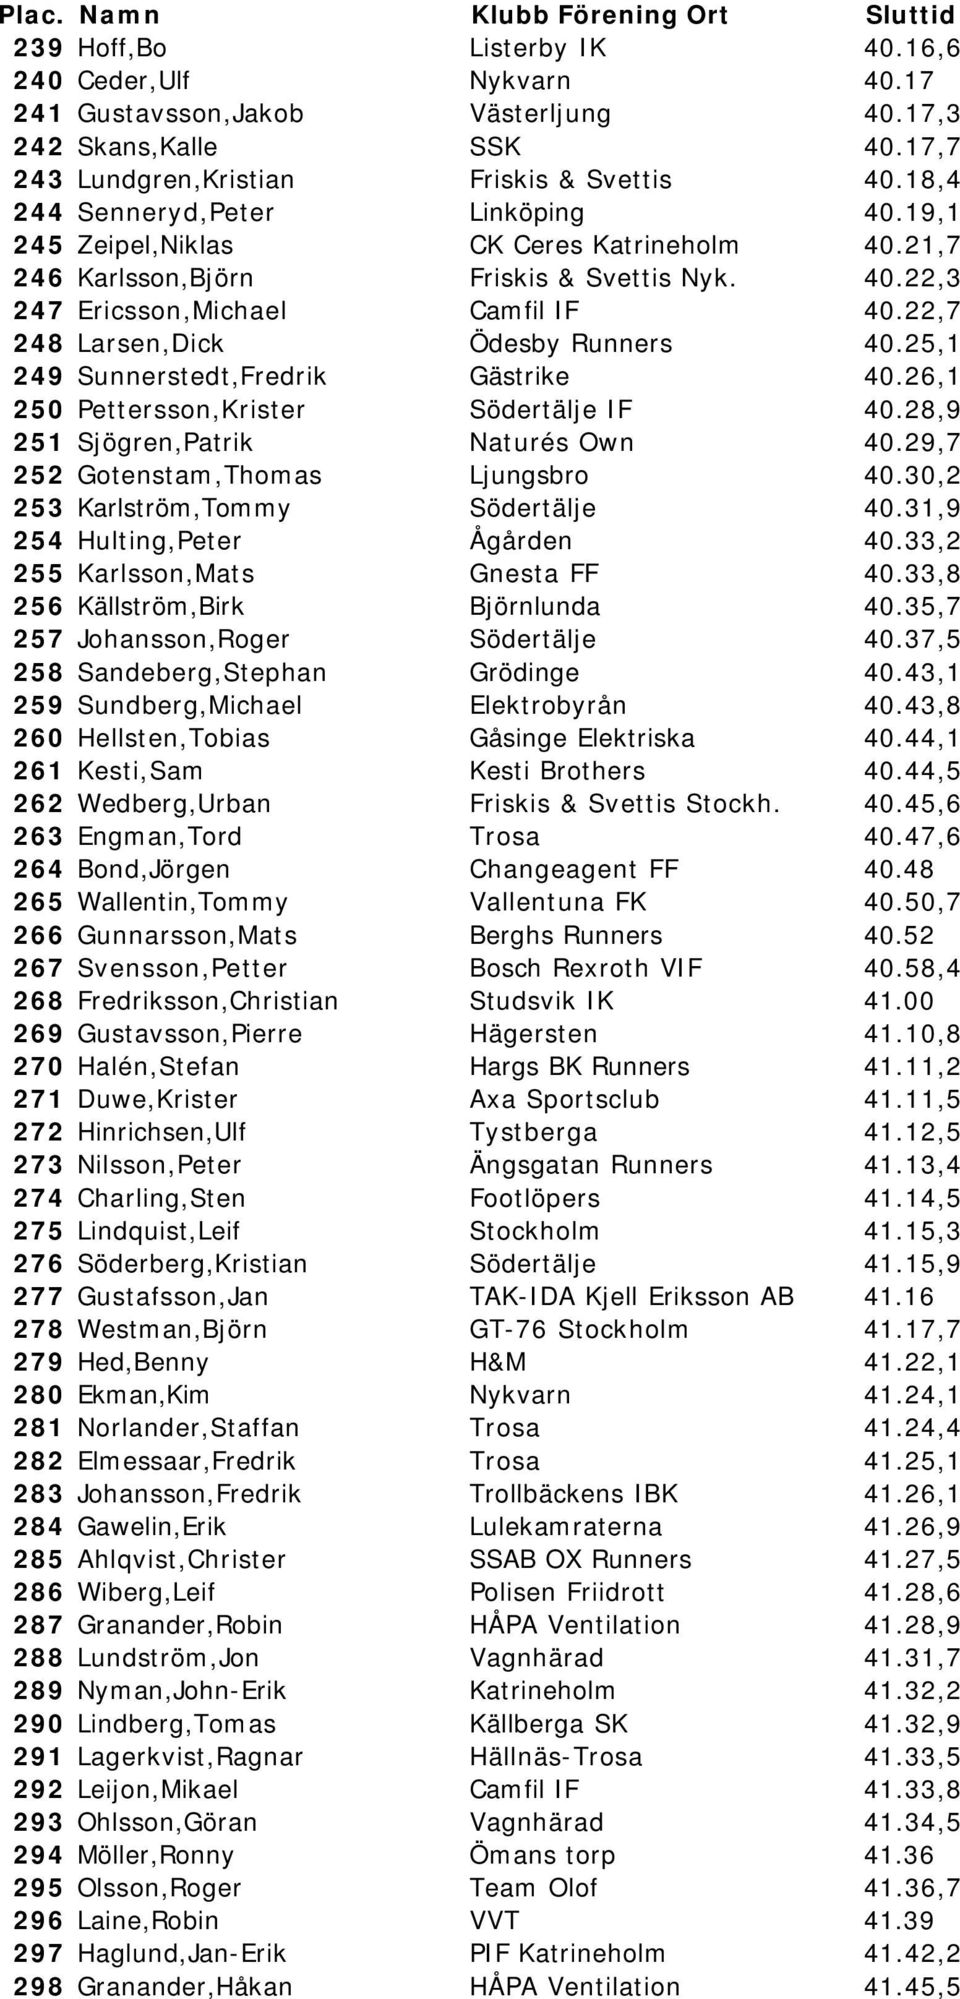 22,7 248 Larsen,Dick Ödesby Runners 40.25,1 249 Sunnerstedt,Fredrik Gästrike 40.26,1 250 Pettersson,Krister Södertälje IF 40.28,9 251 Sjögren,Patrik Naturés Own 40.